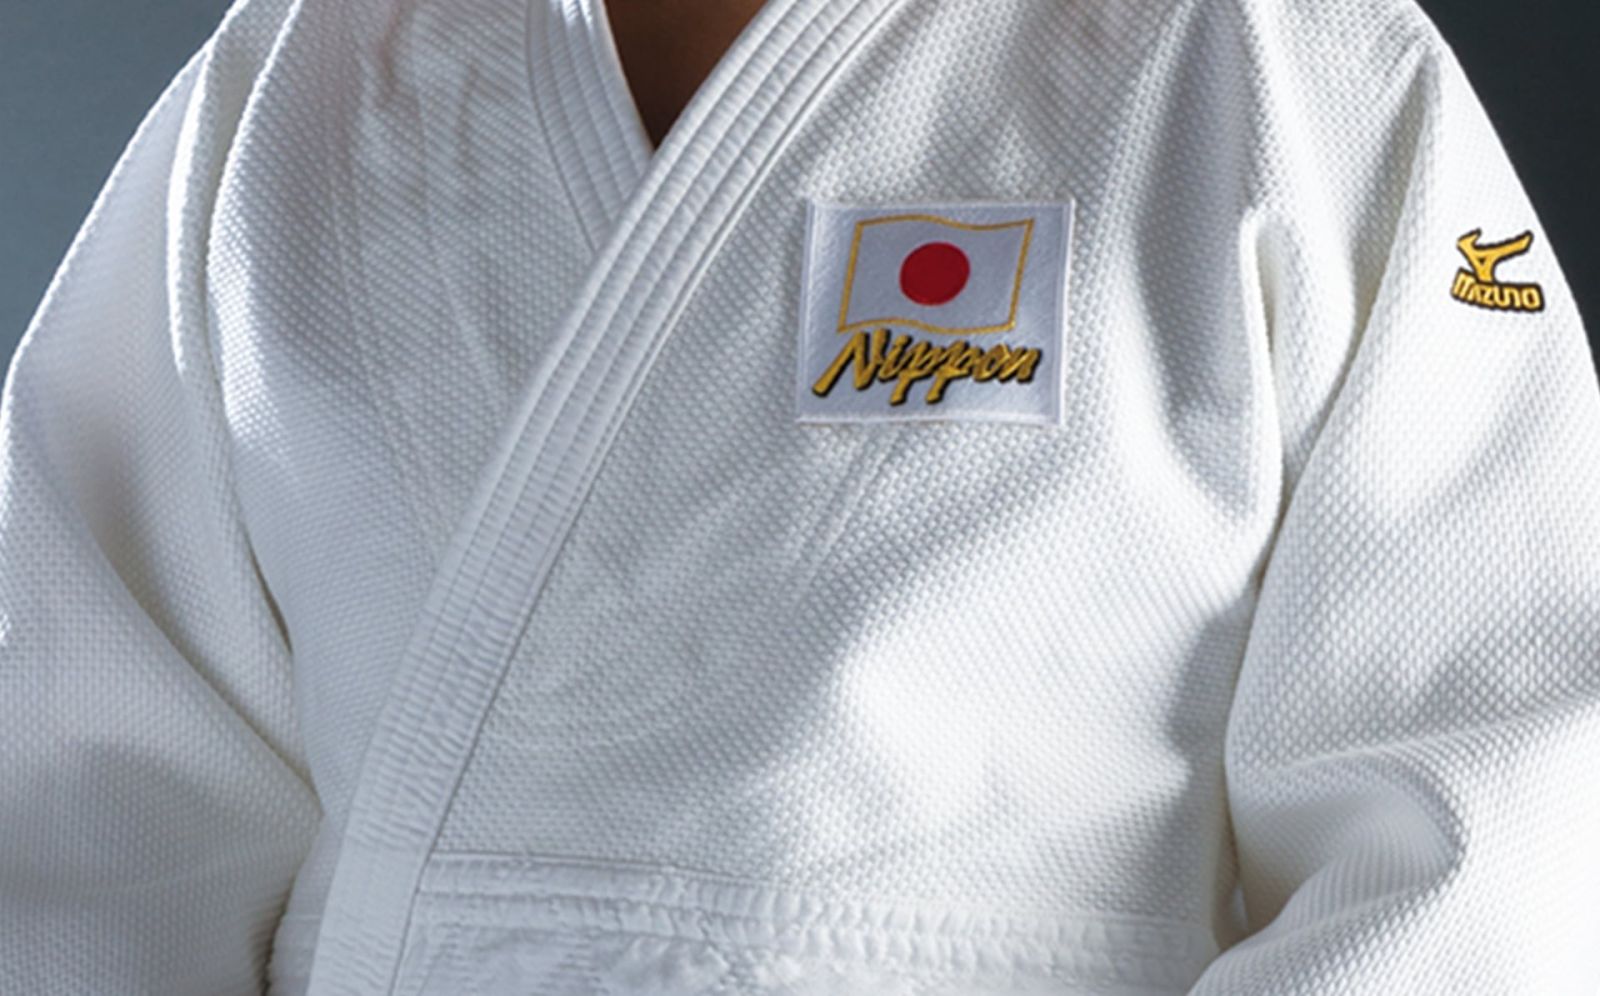 Mizuno Judo Gi - The Worlds Best Judo uniforms